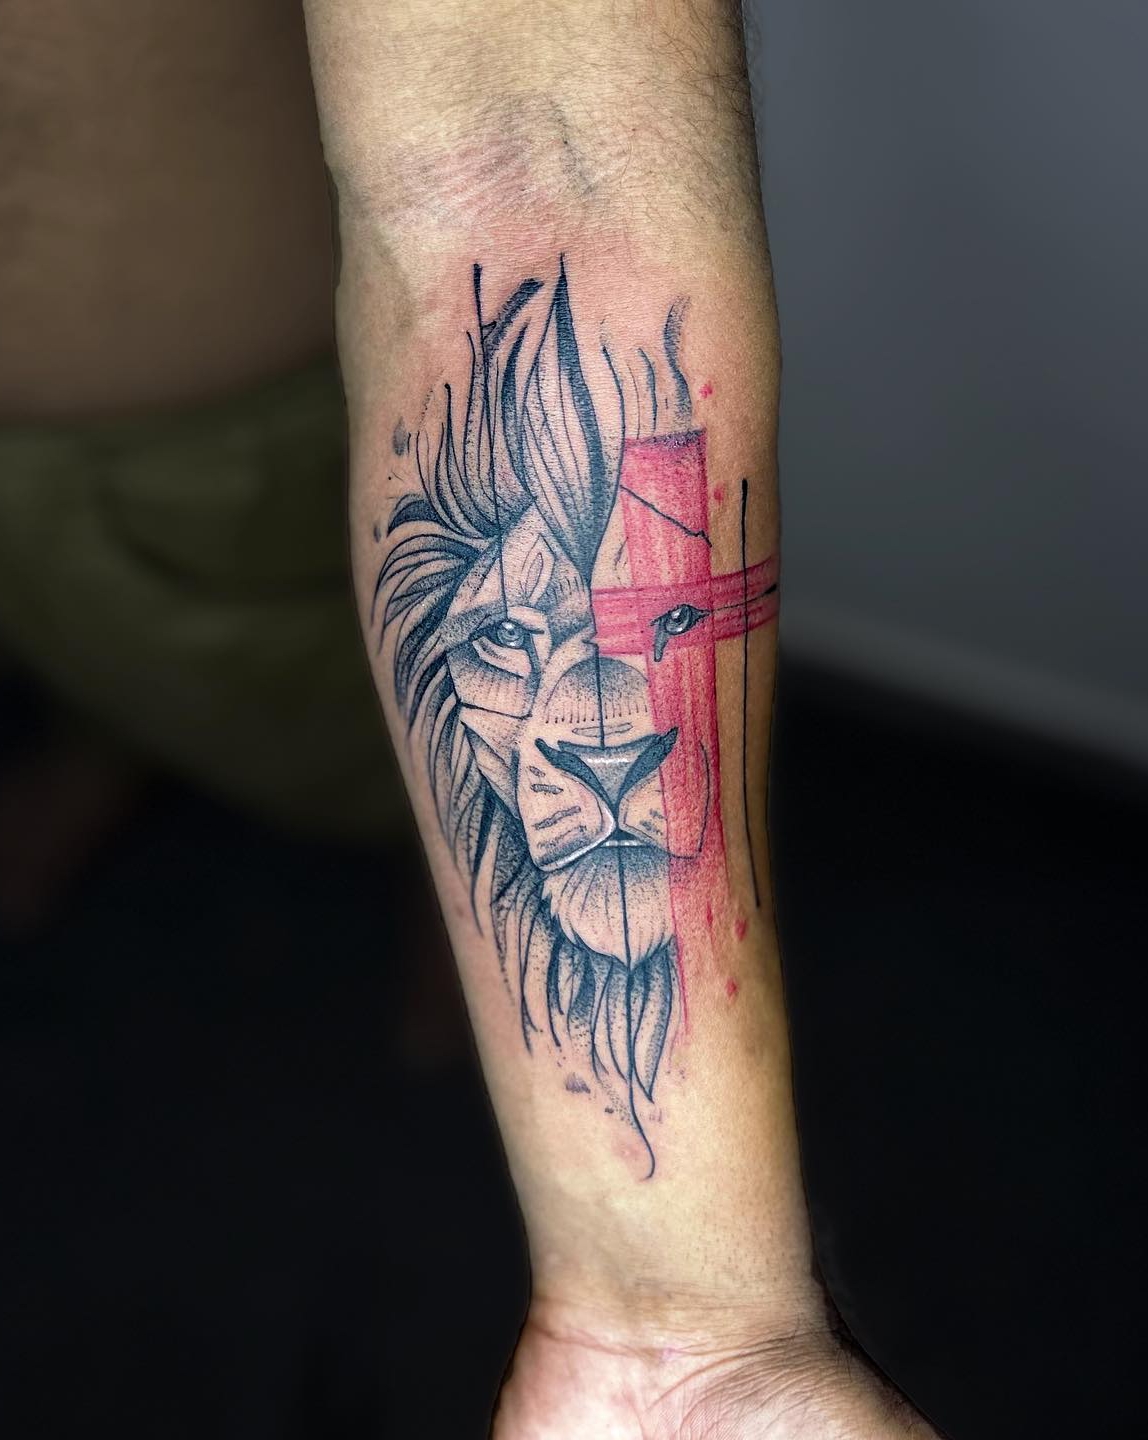 Half Lion and Cross Tattoo onArm